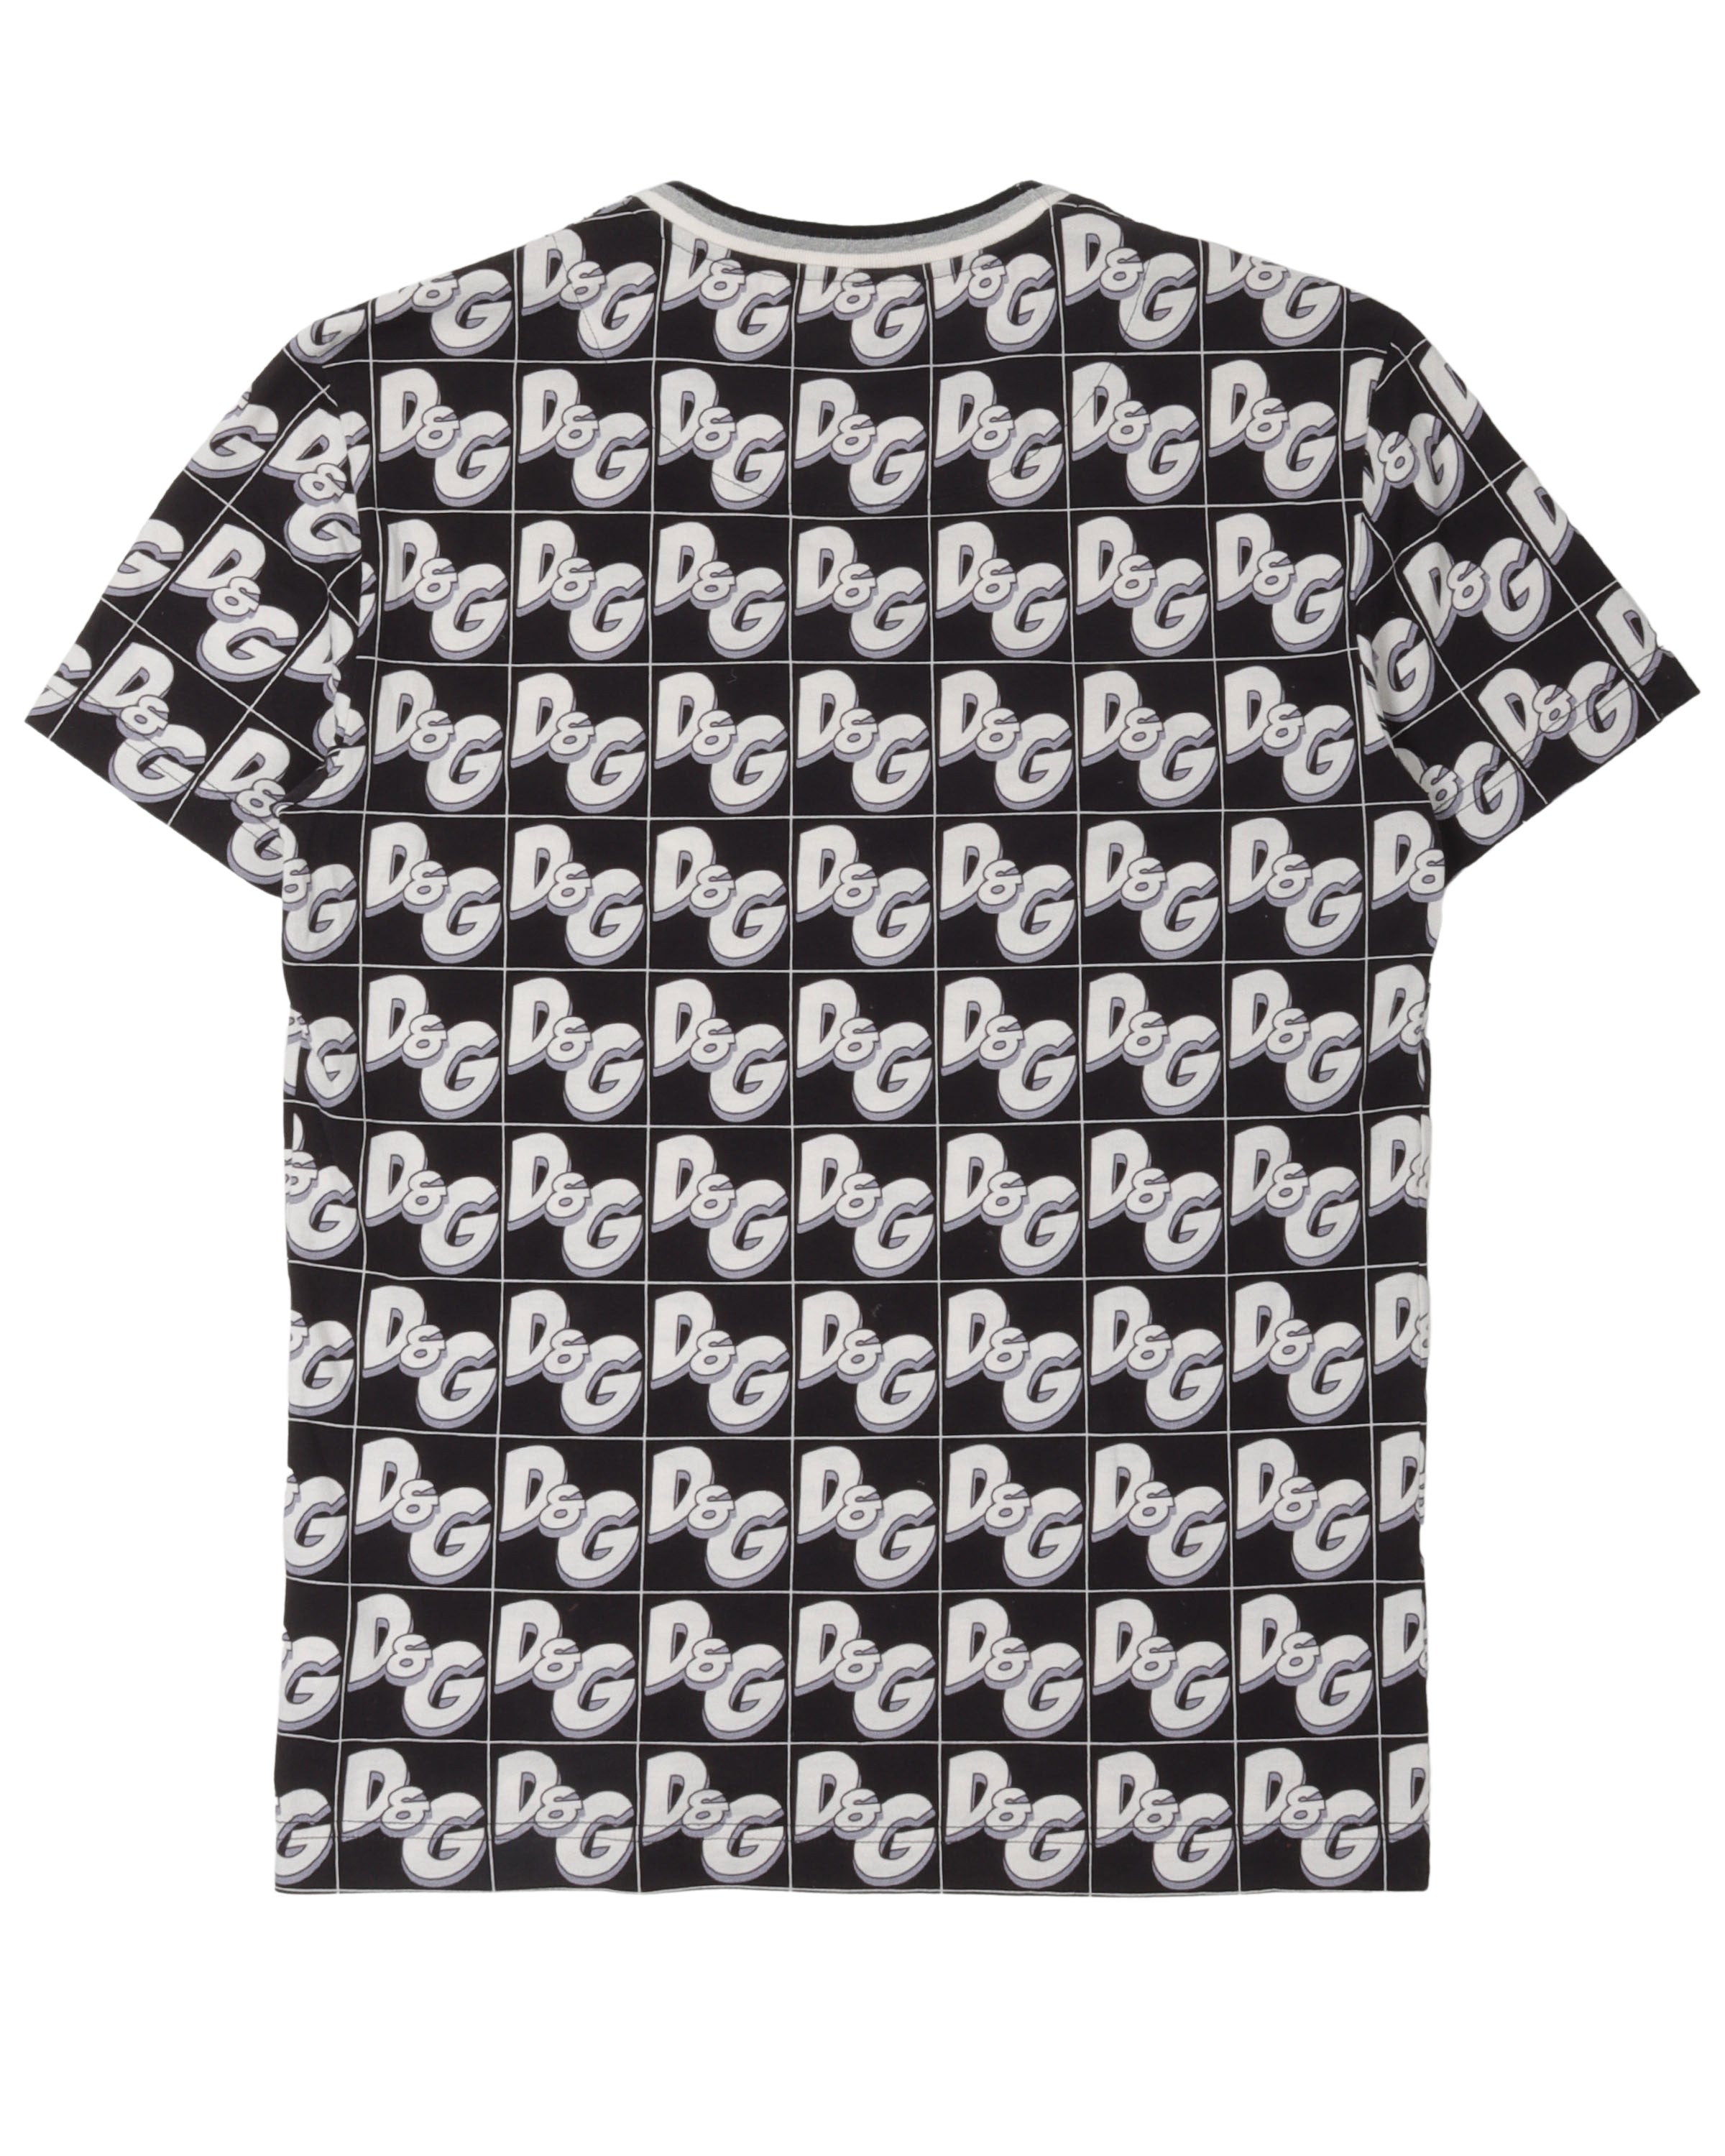 D&G Monogram T-Shirt